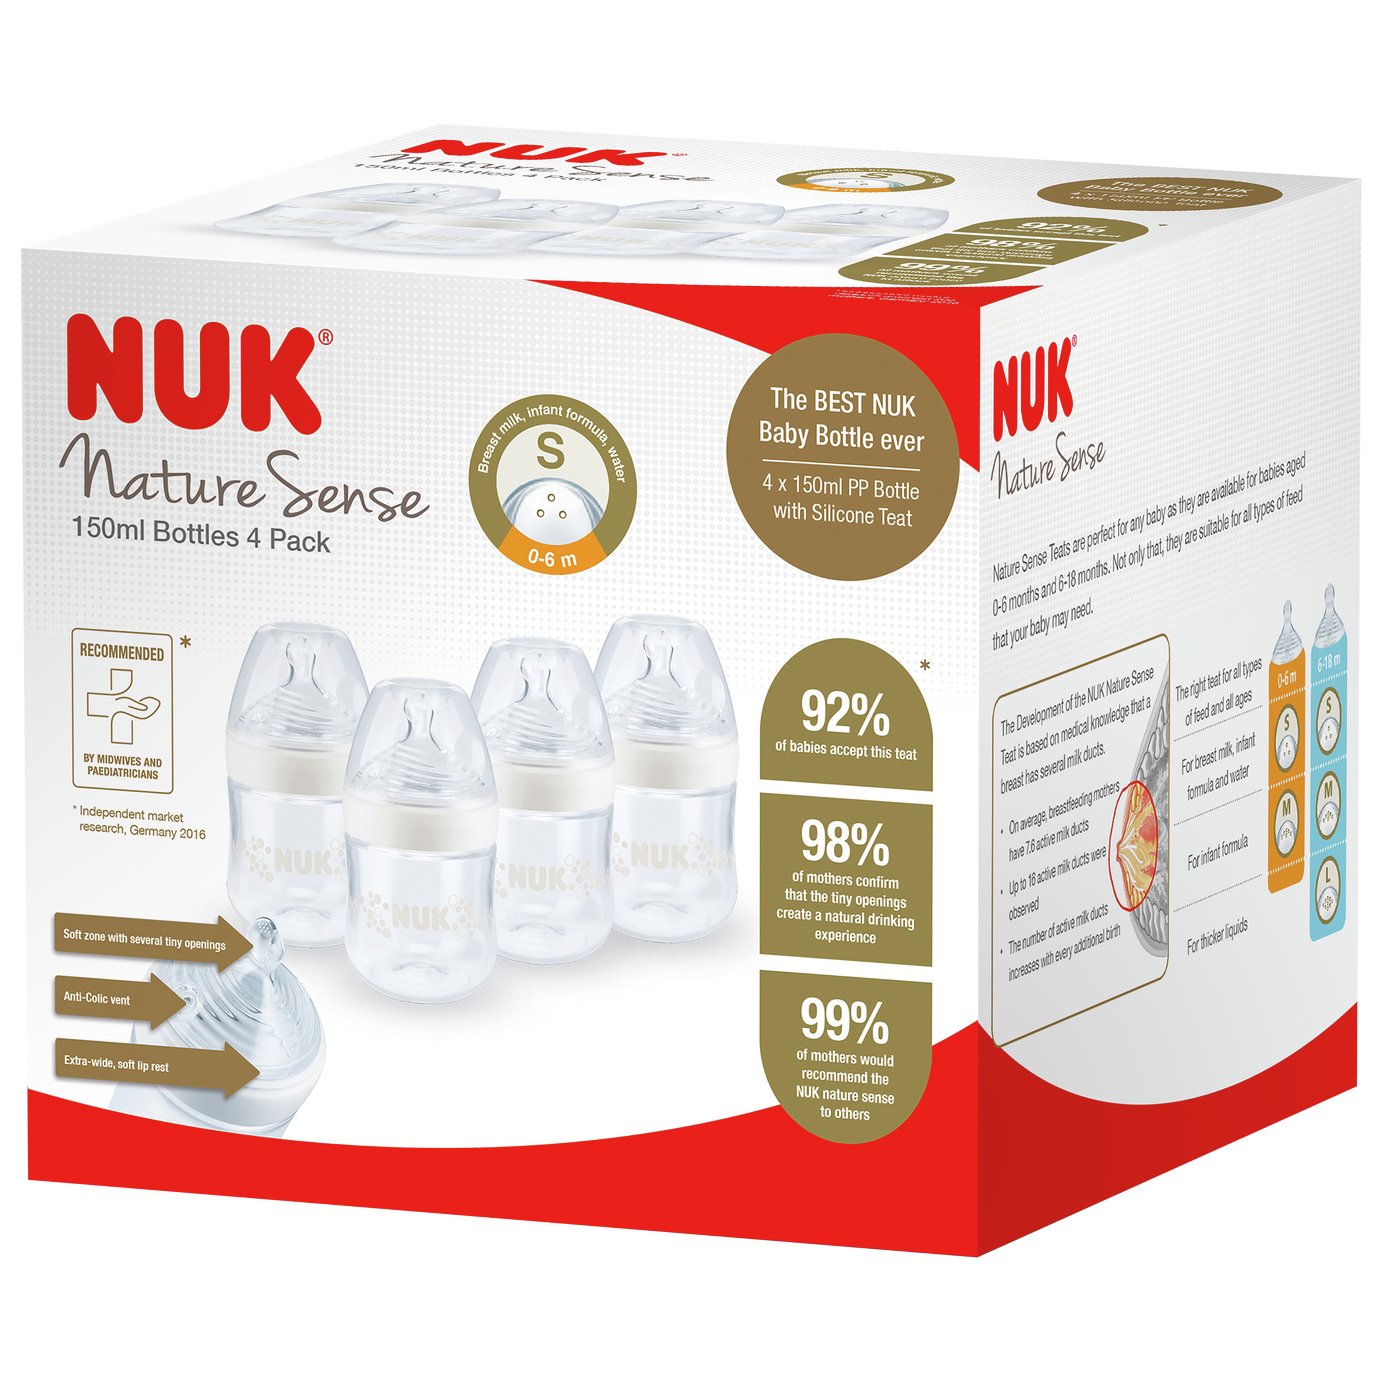 NUK Nature Sense 150ml Bottles Review